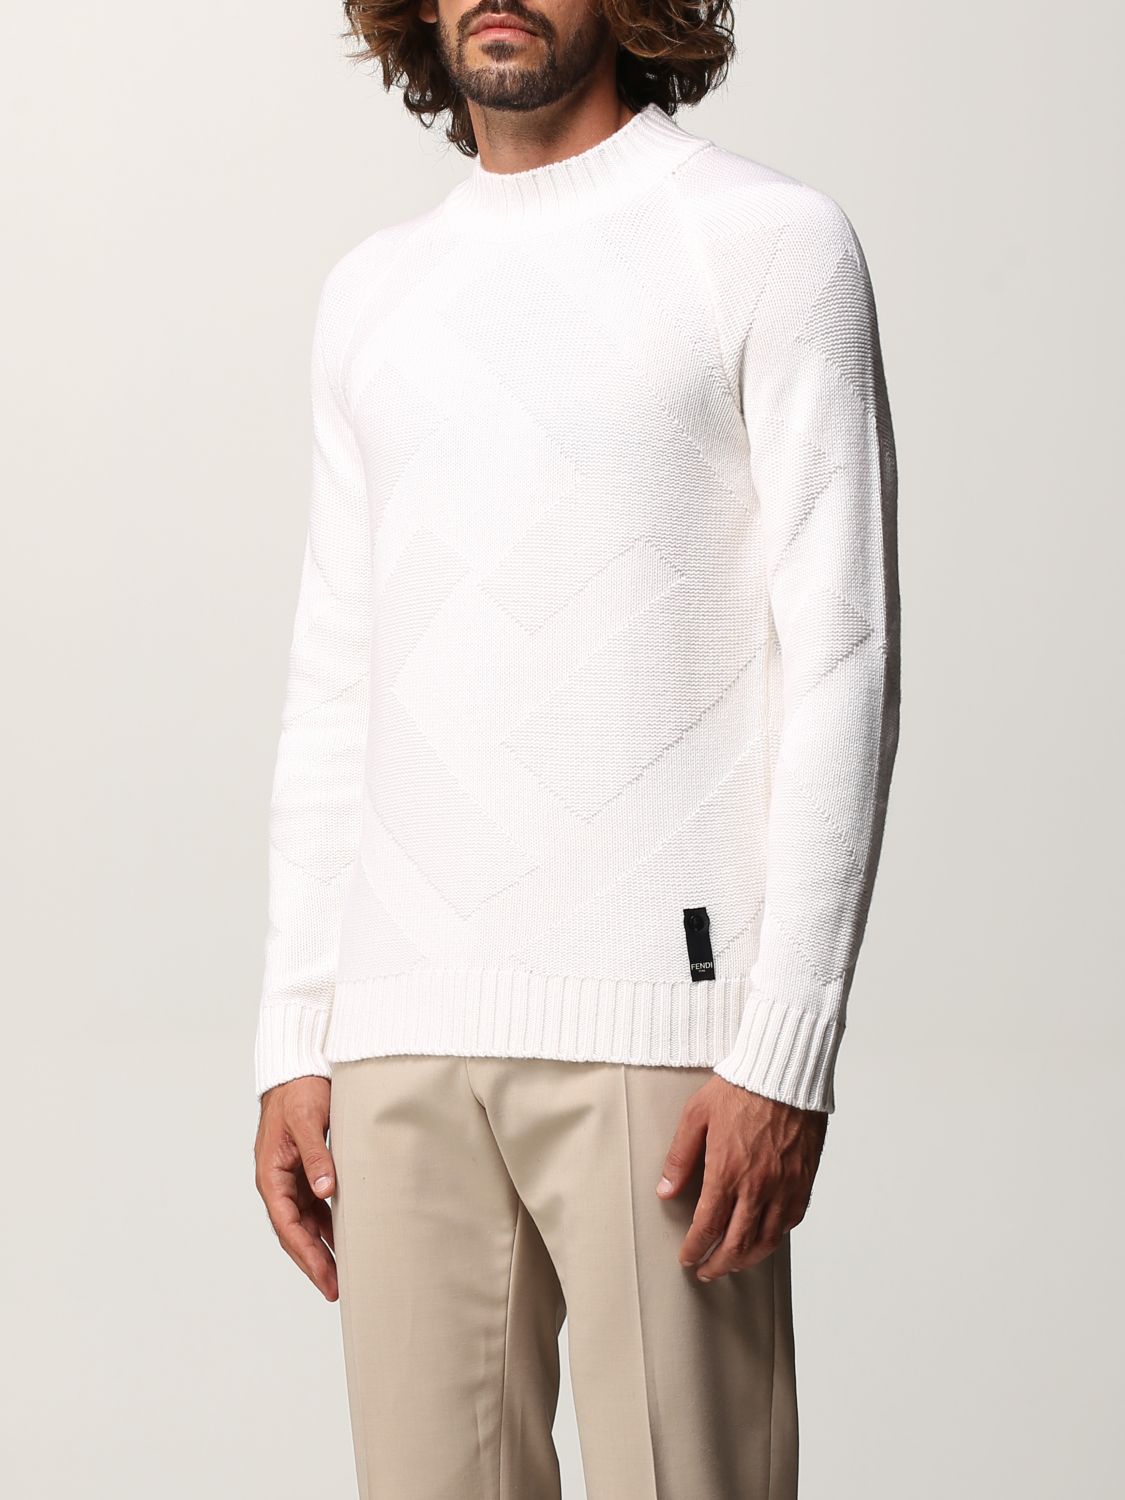 FENDI: cashmere sweater | Sweater Fendi Men Ivory | Sweater Fendi 